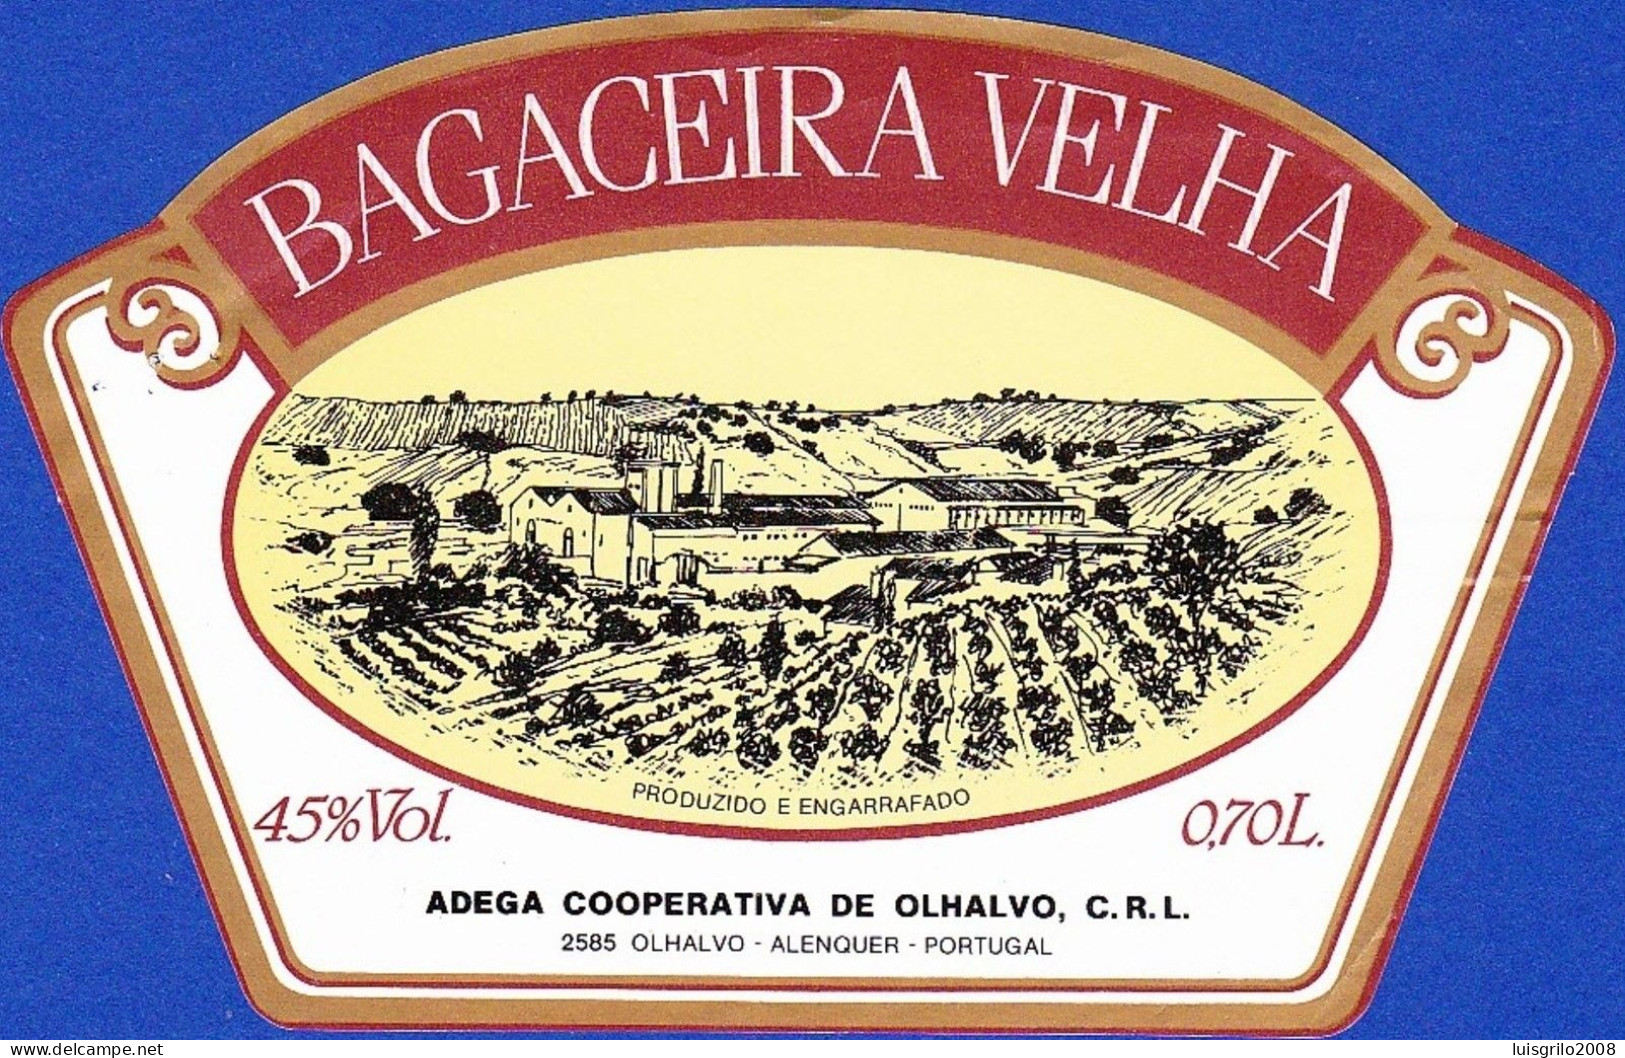 Brandy Label, Portugal - BAGACEIRA VELHA. Adega Cooperativa De Olhalvo.  Alenquer - Alcoholes Y Licores